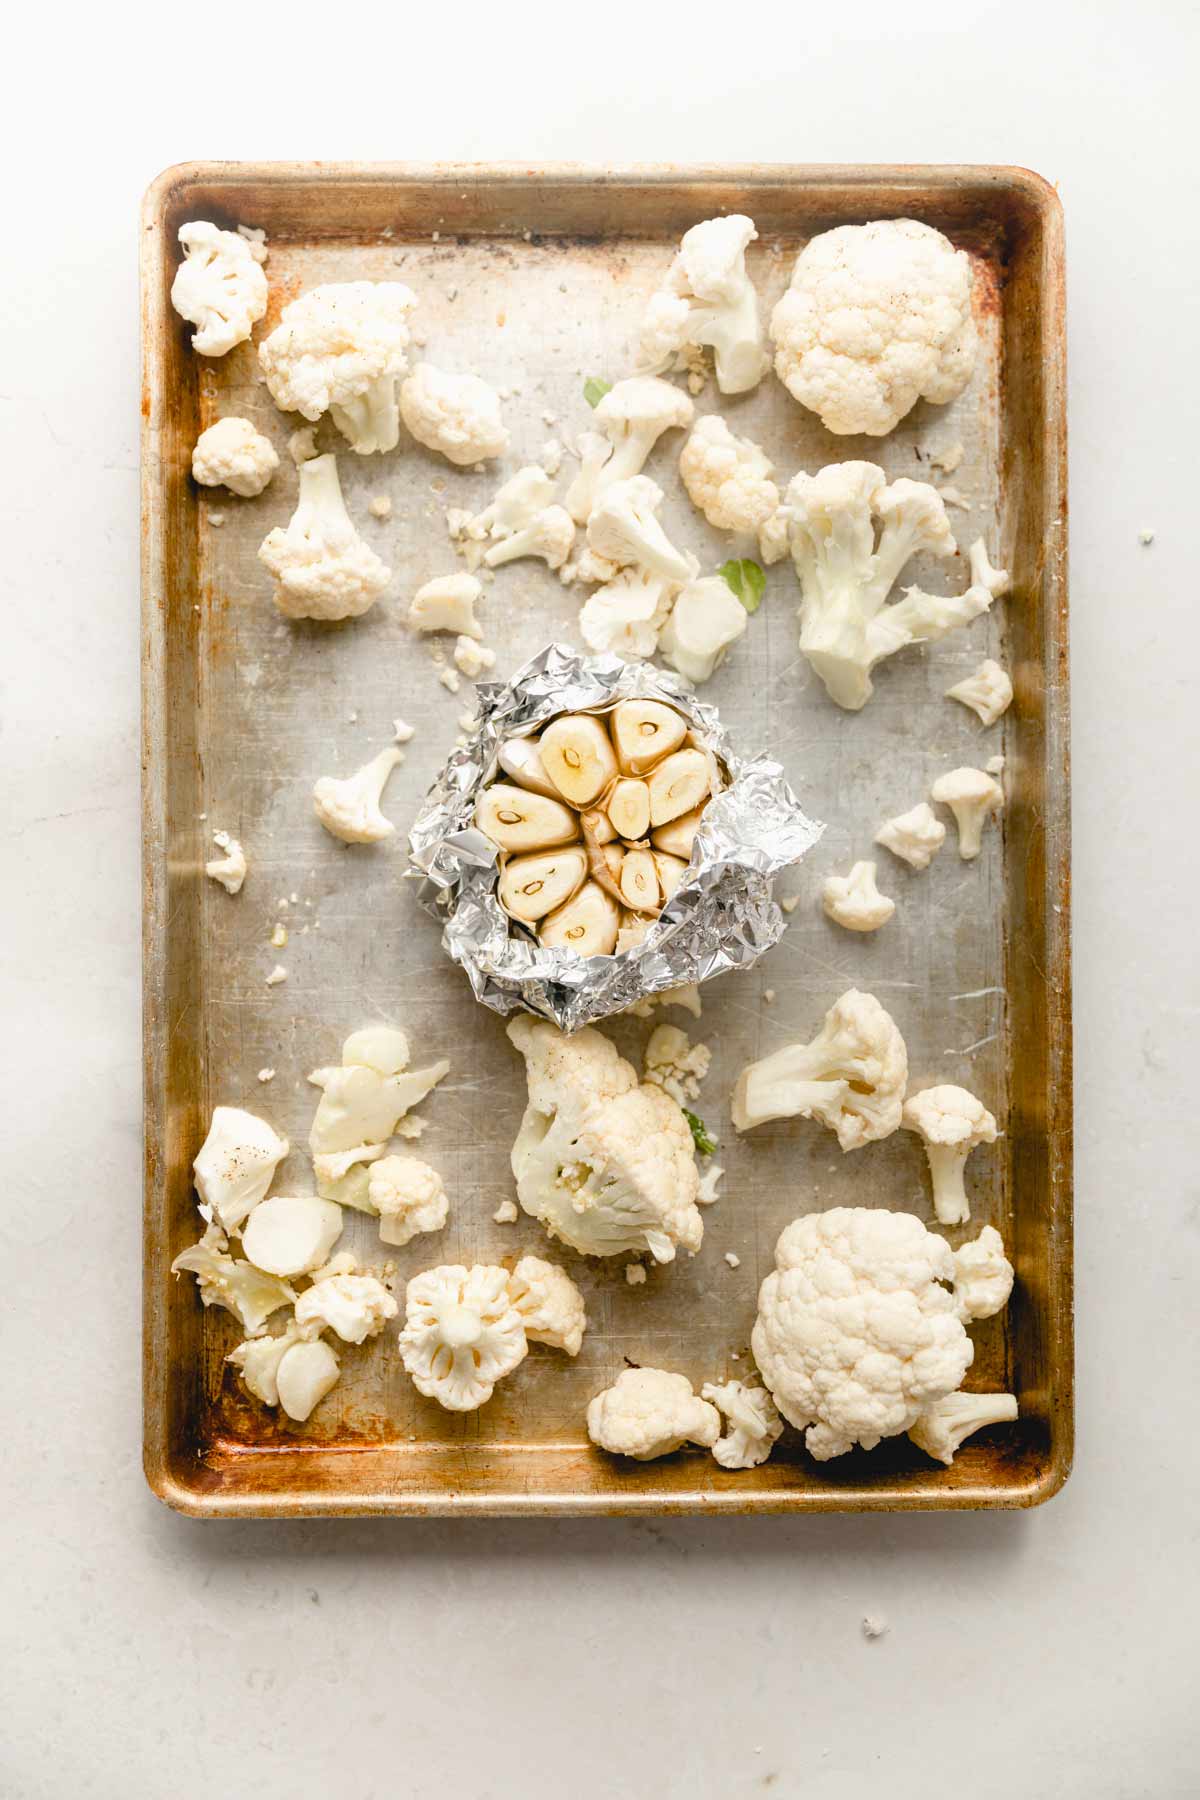 cauliflower and garlic on a sheet pan.